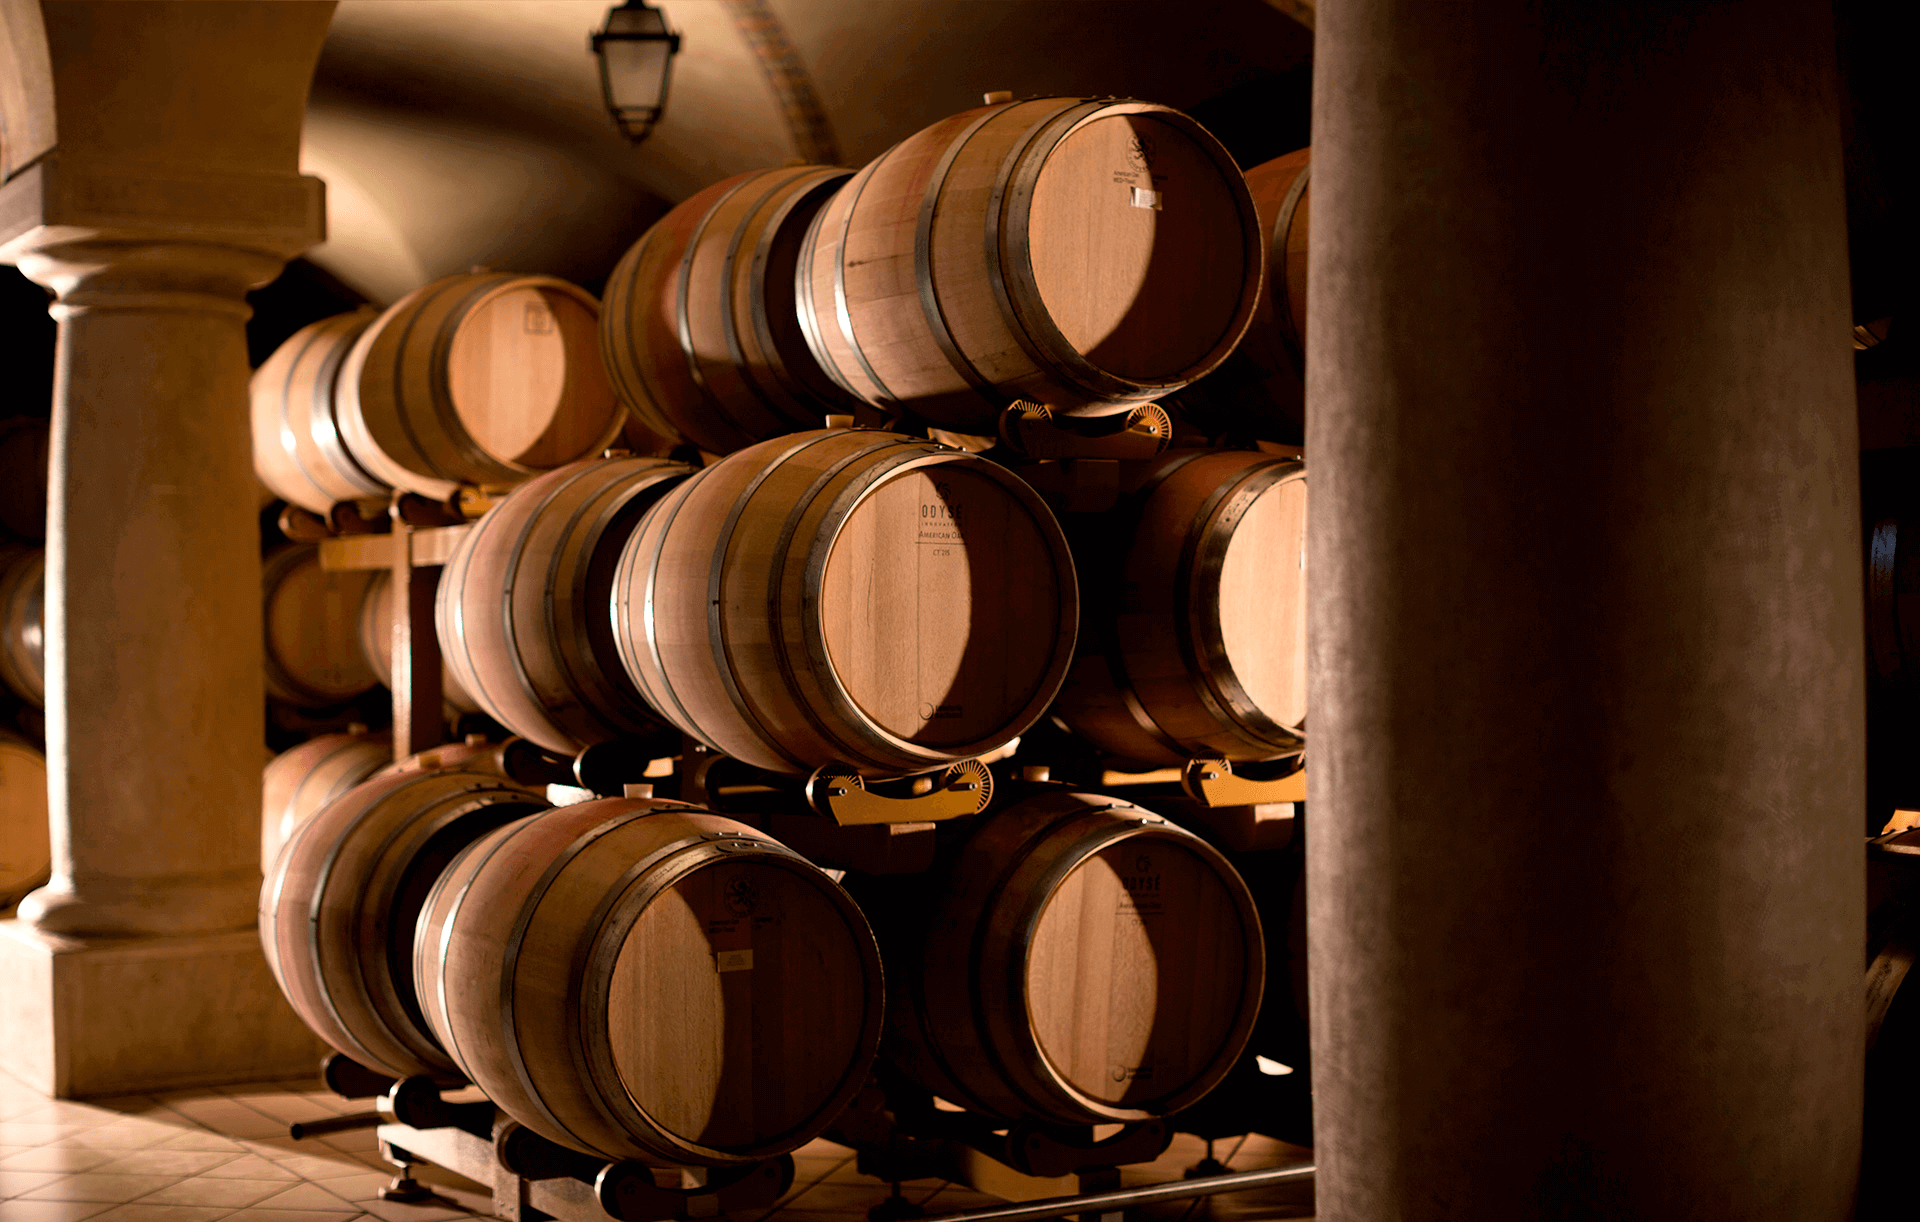 Barrels in the cellar